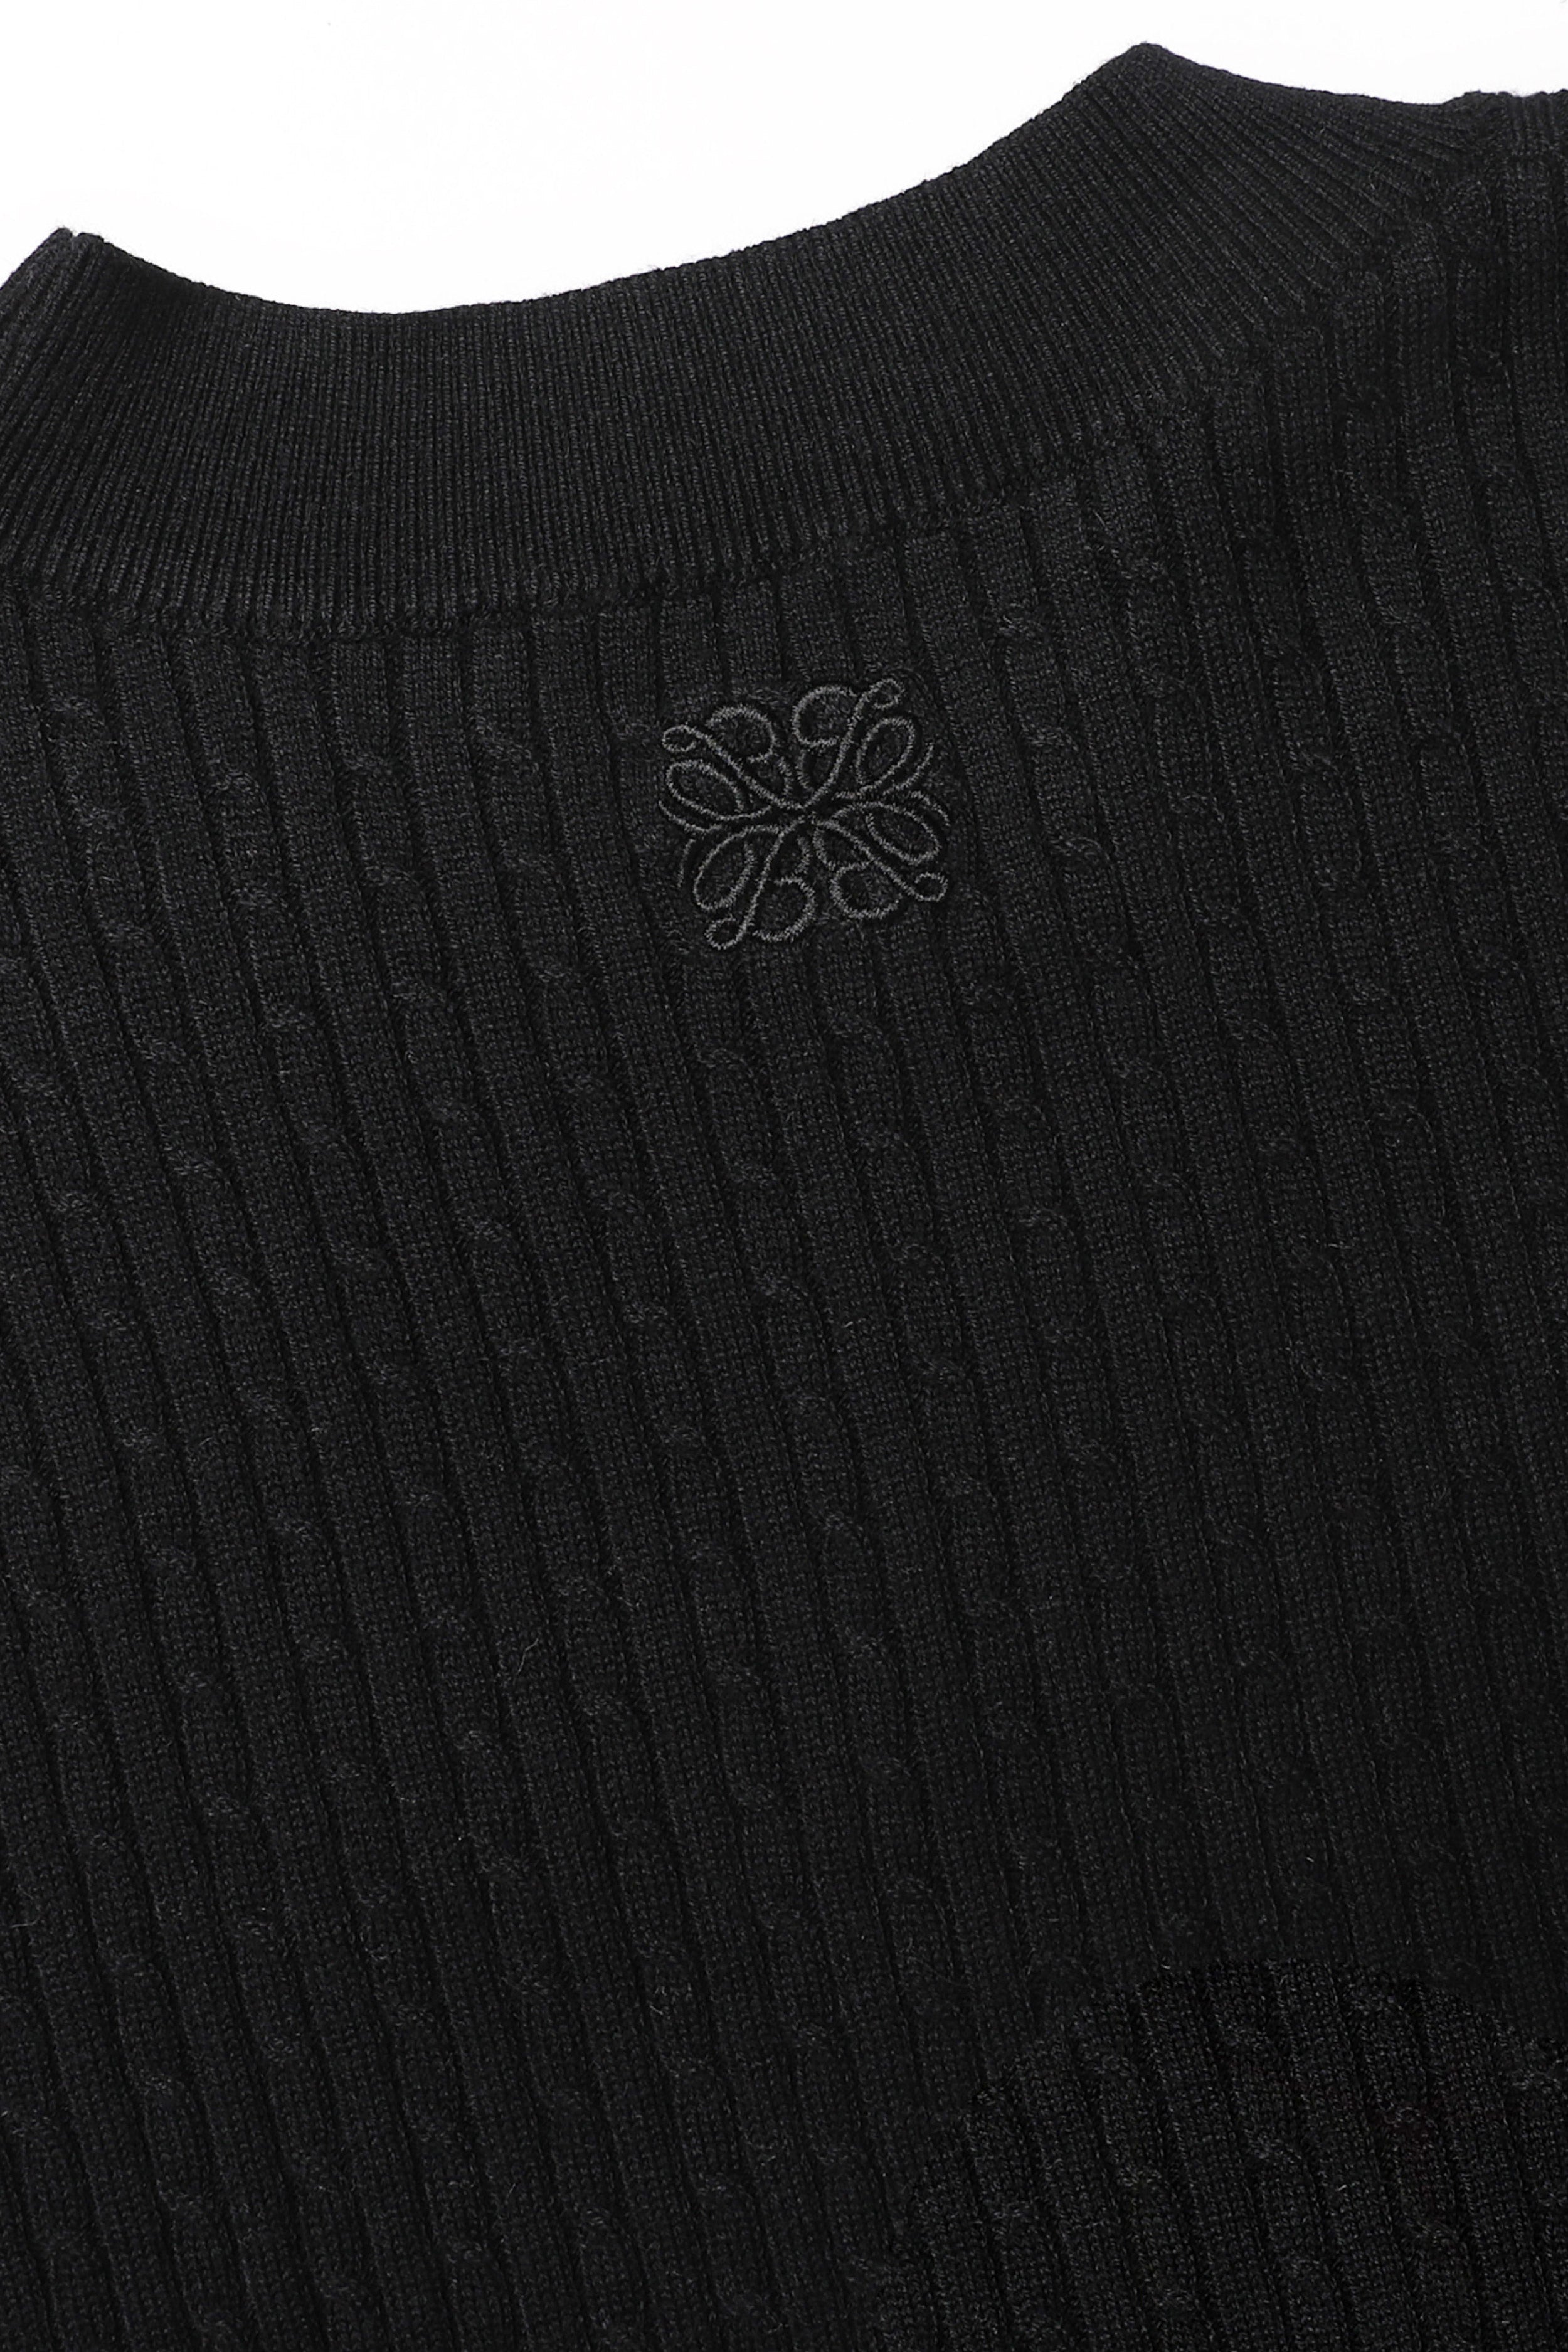 Badblood Minimalist Logo Crewneck Sweater Black